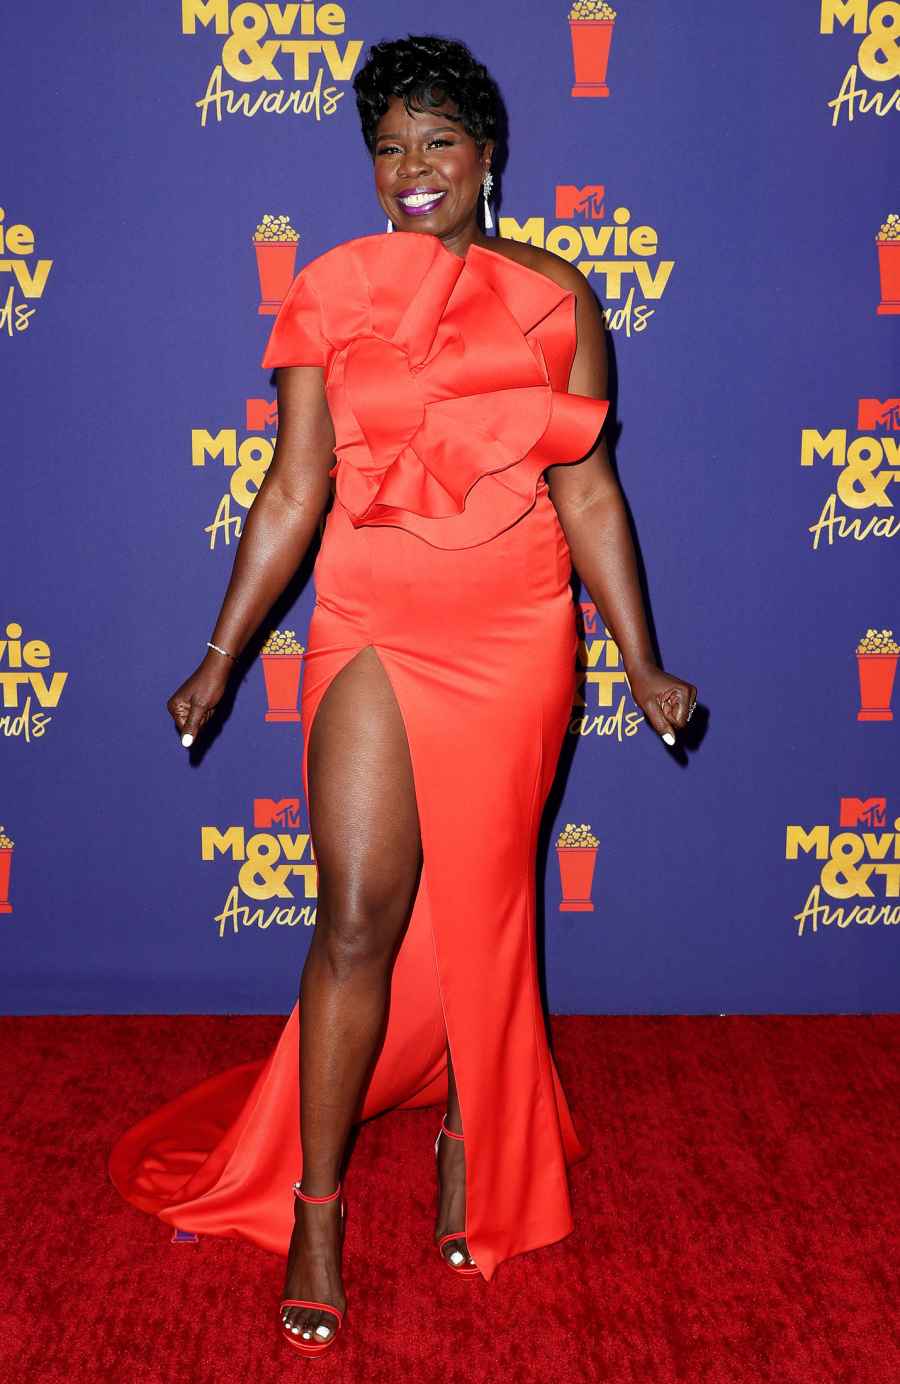 MTV Movie & TV Awards Red Carpet Arrivals - Leslie Jones